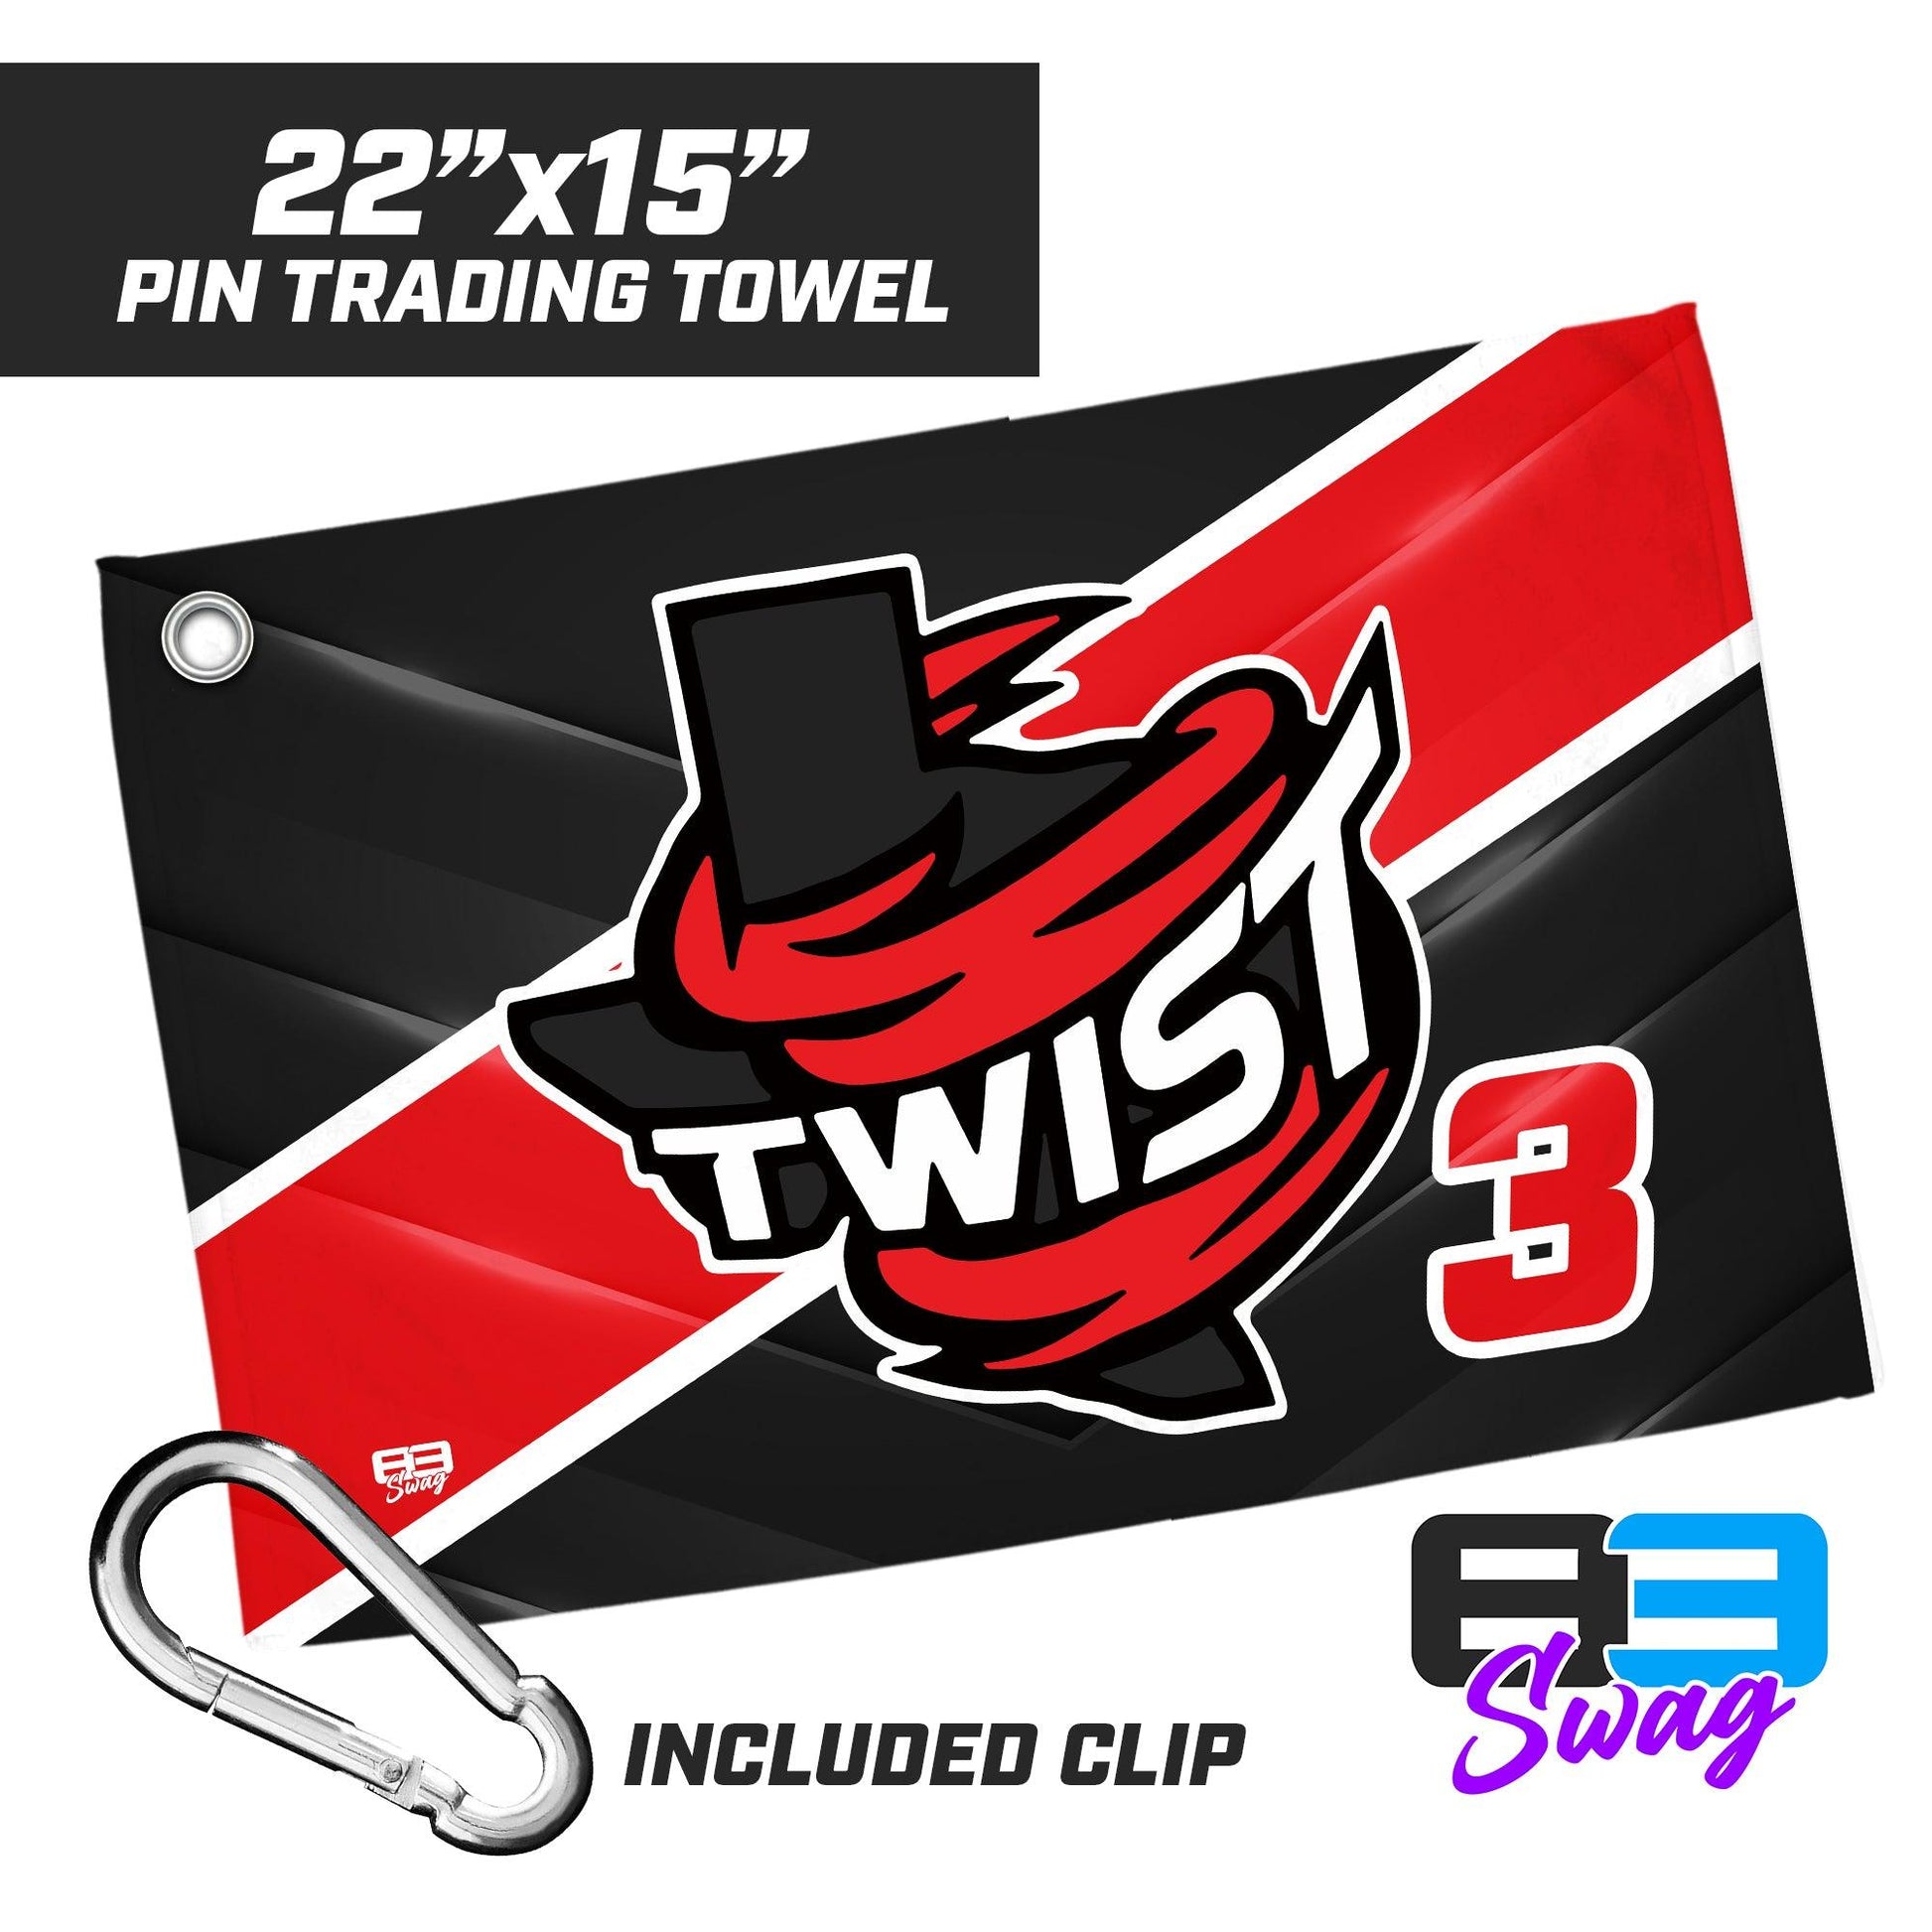 Twist Softball - 22"x15" Pin Trading Towel - 83Swag